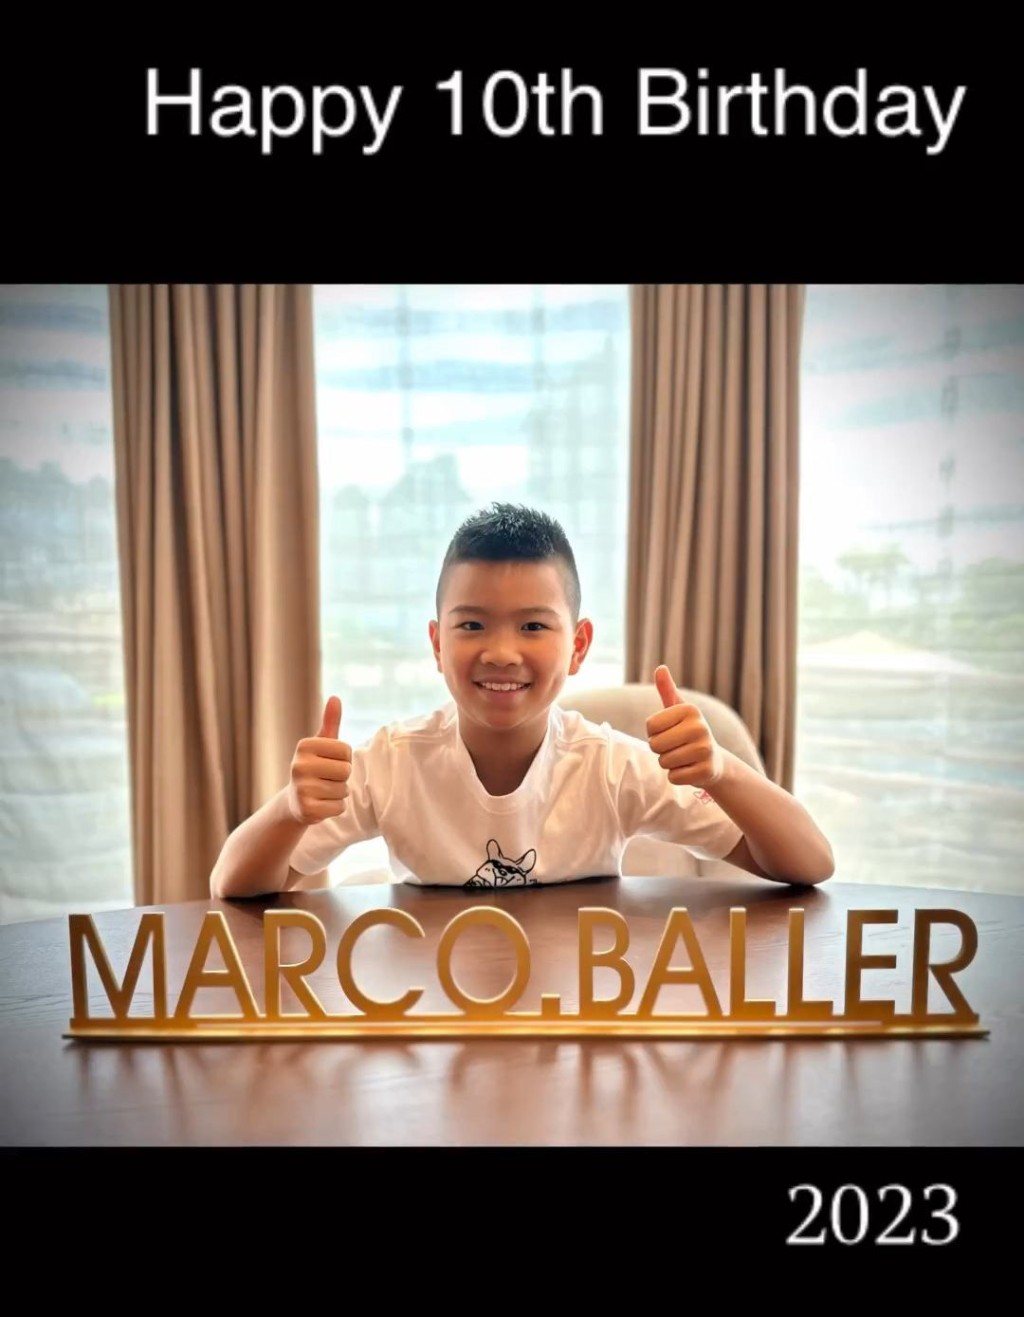 Marco已經10歲大。